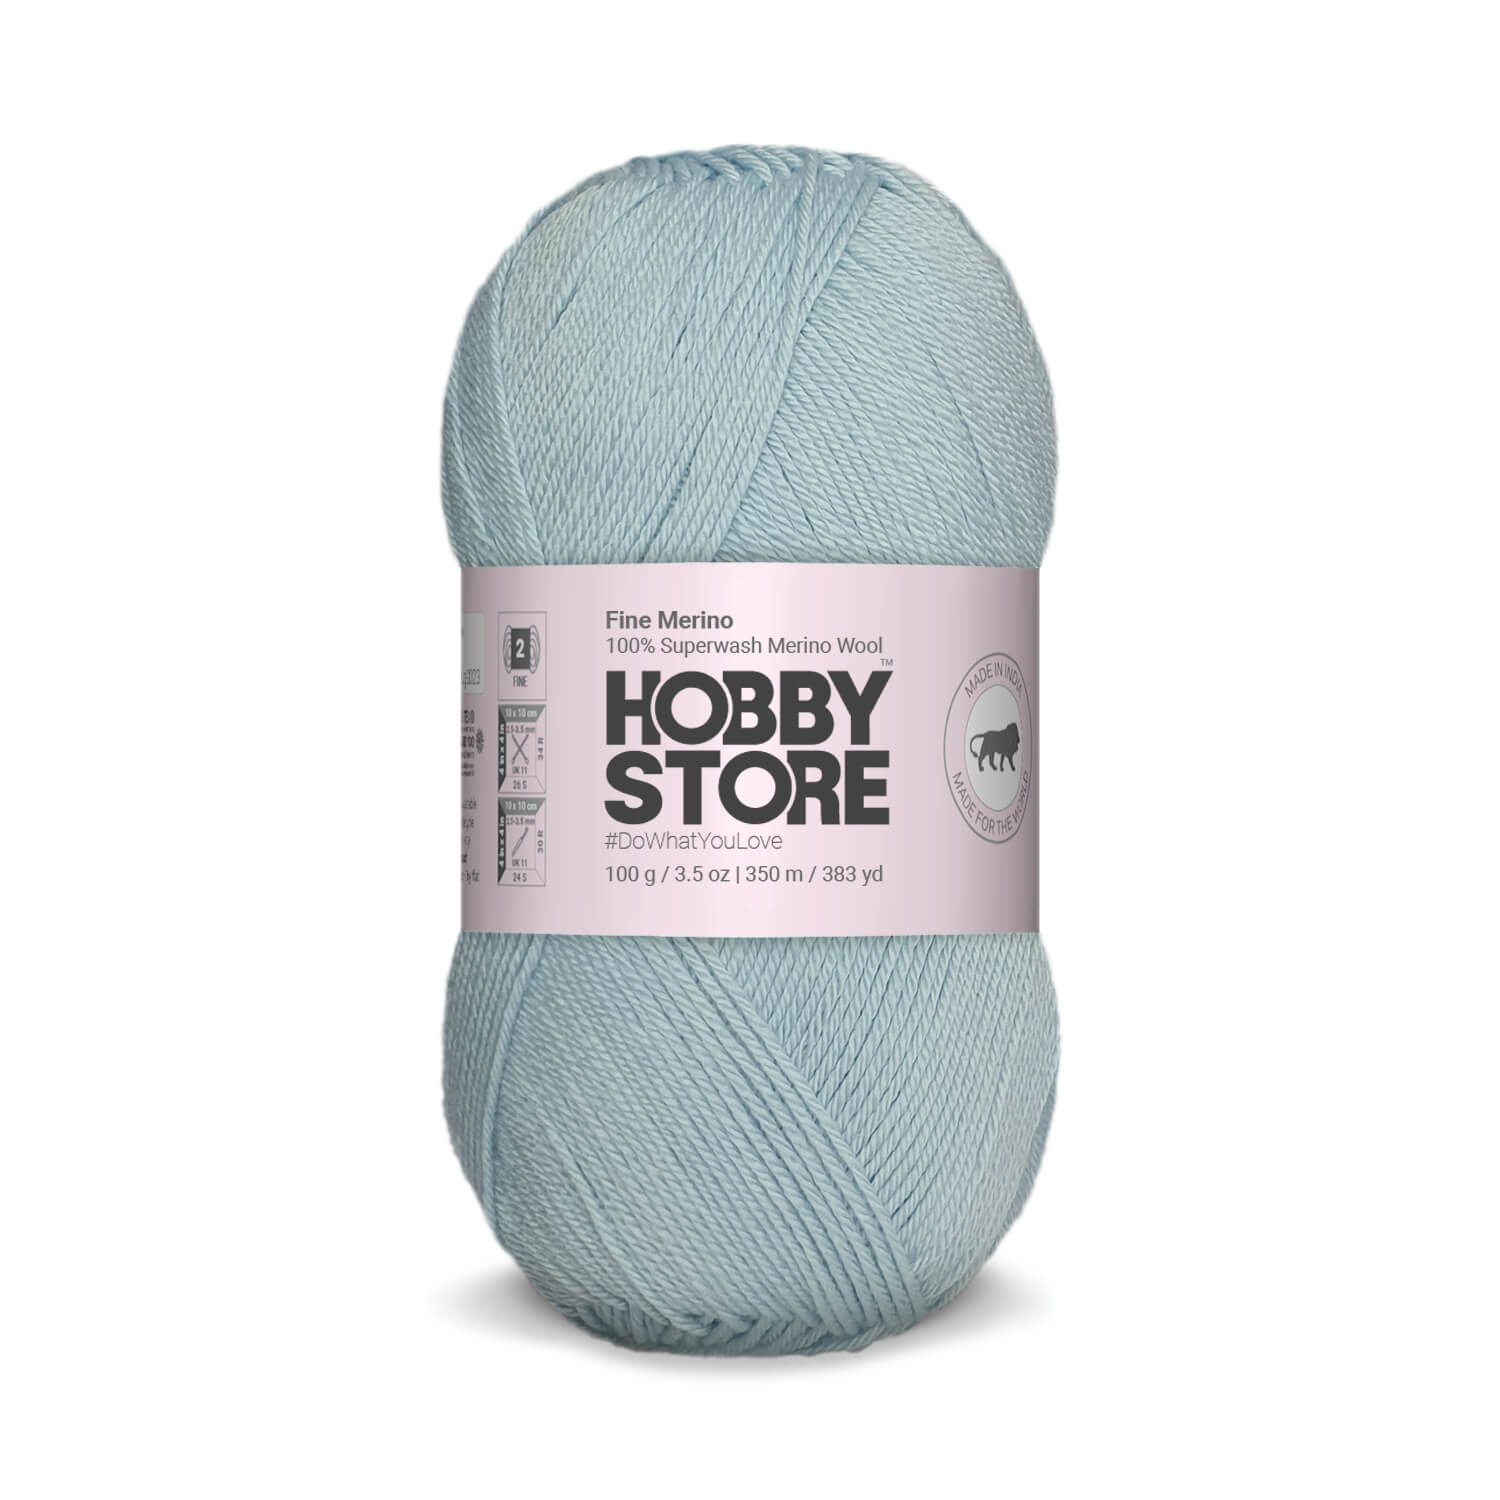 Fine Merino Wool by Hobby Store - Baby Blue FM022